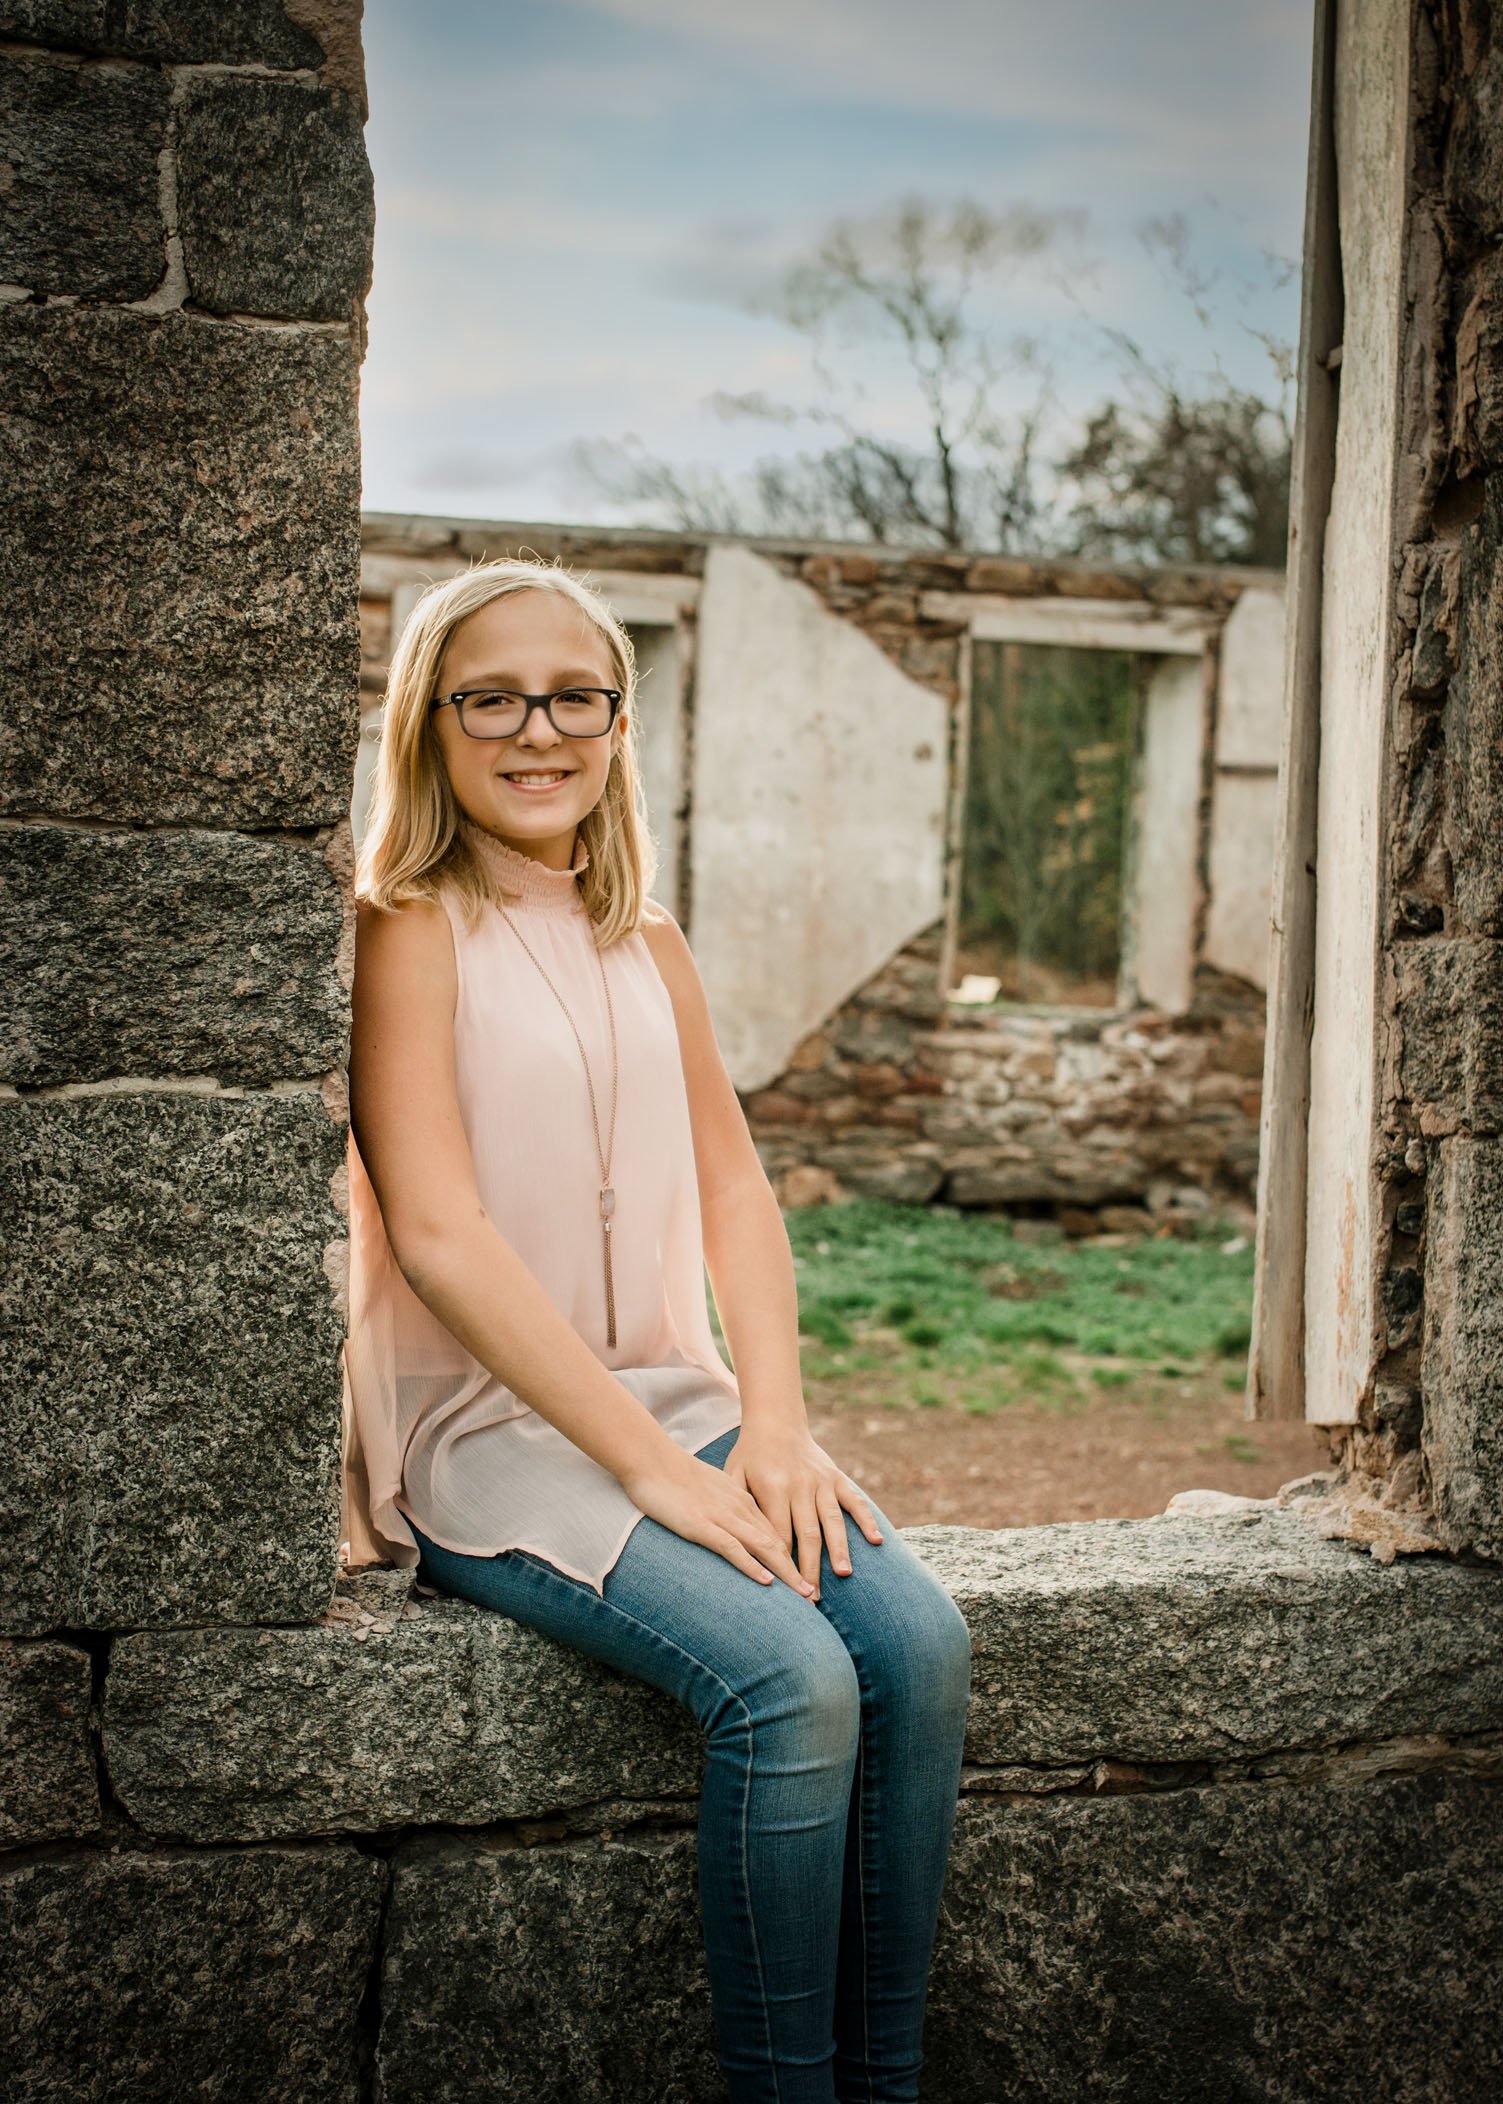 Tween girl sits smiling in old window opening of building ruins